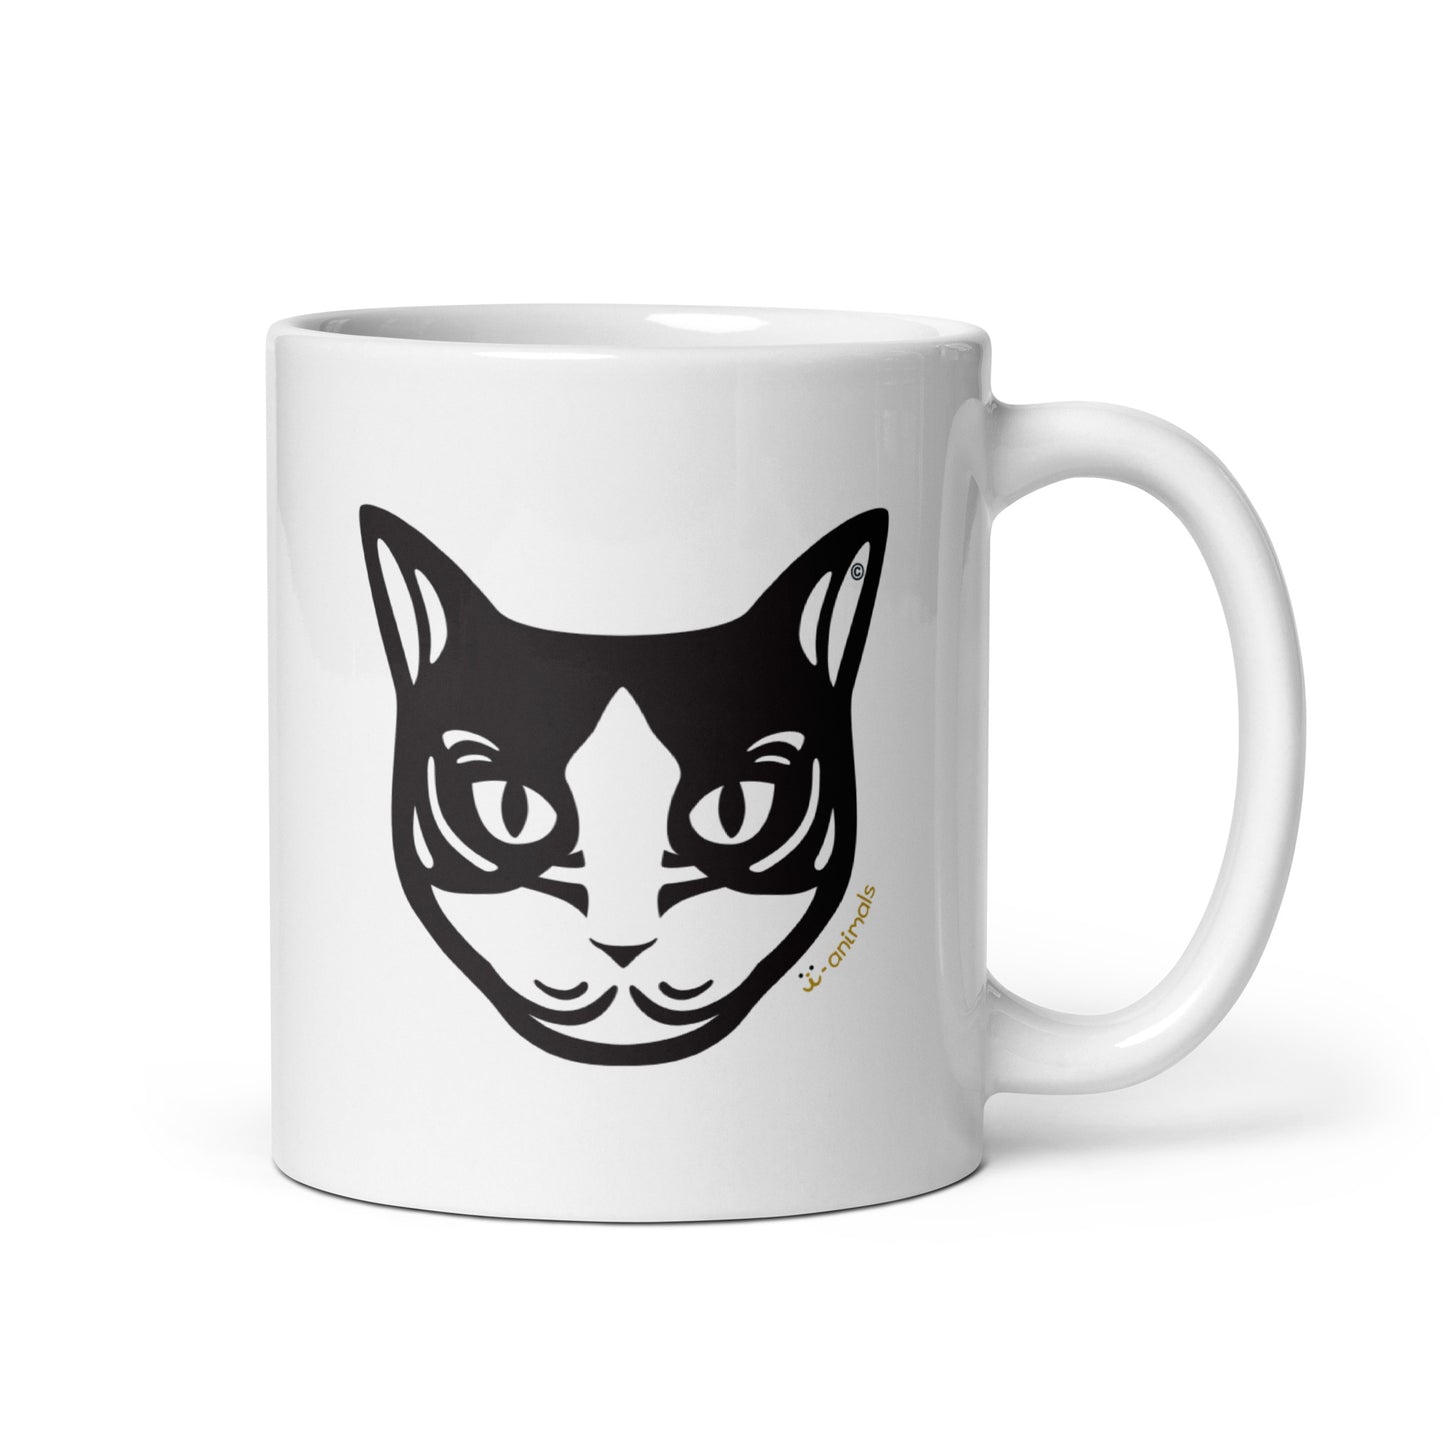 Black and White Cat Mug - Tribal